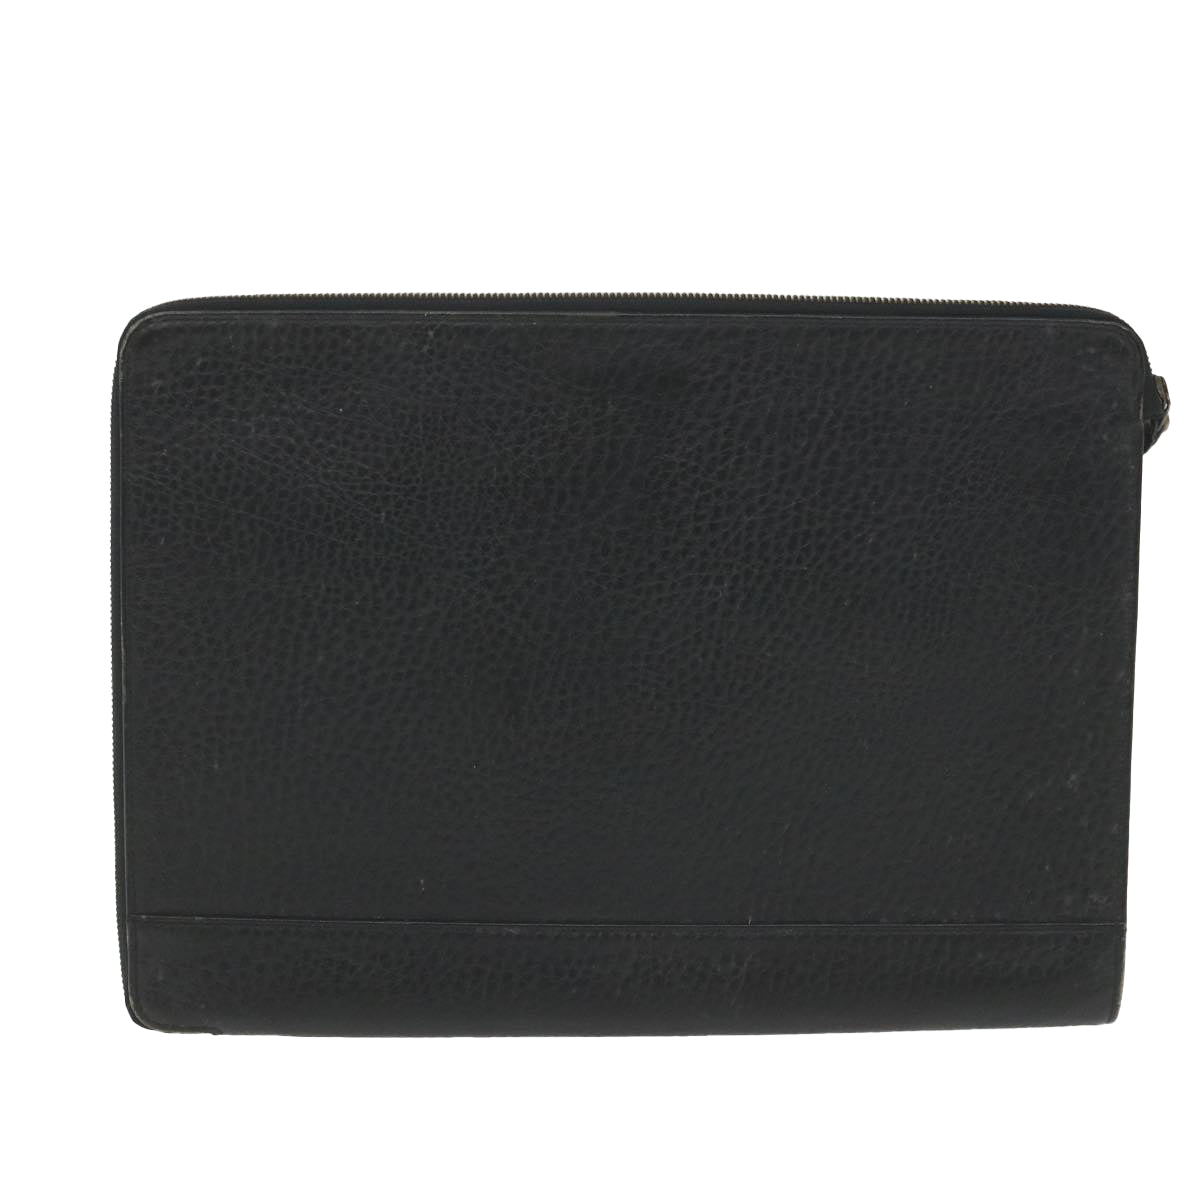 Burberrys Briefcase Leather Black Auth 59094 - 0